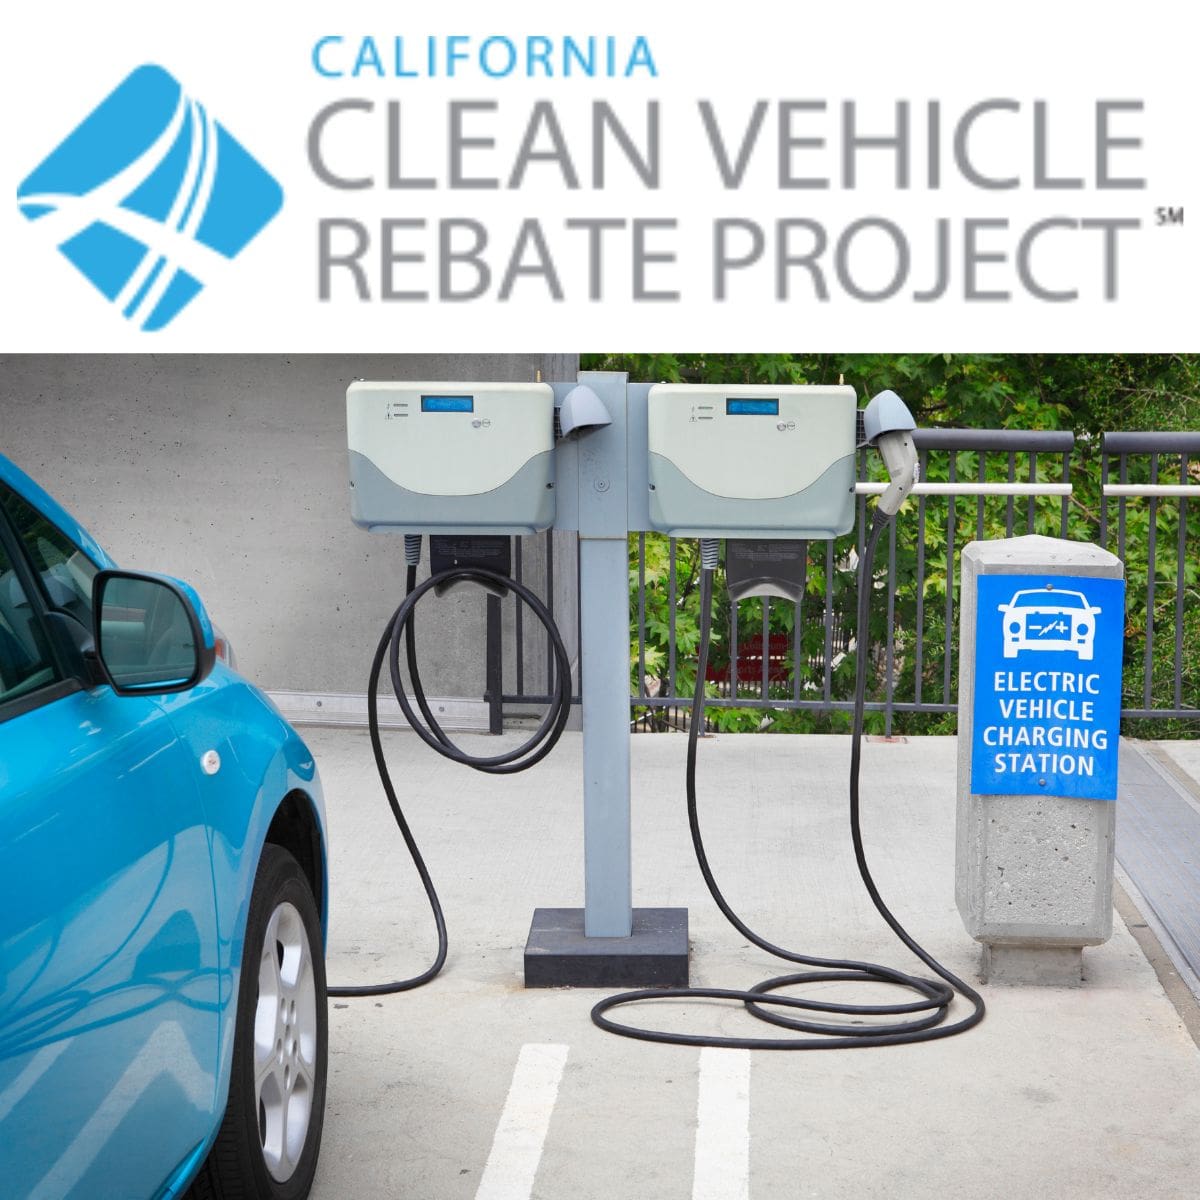 Clean Vehicle Rebate Project (CVRP)